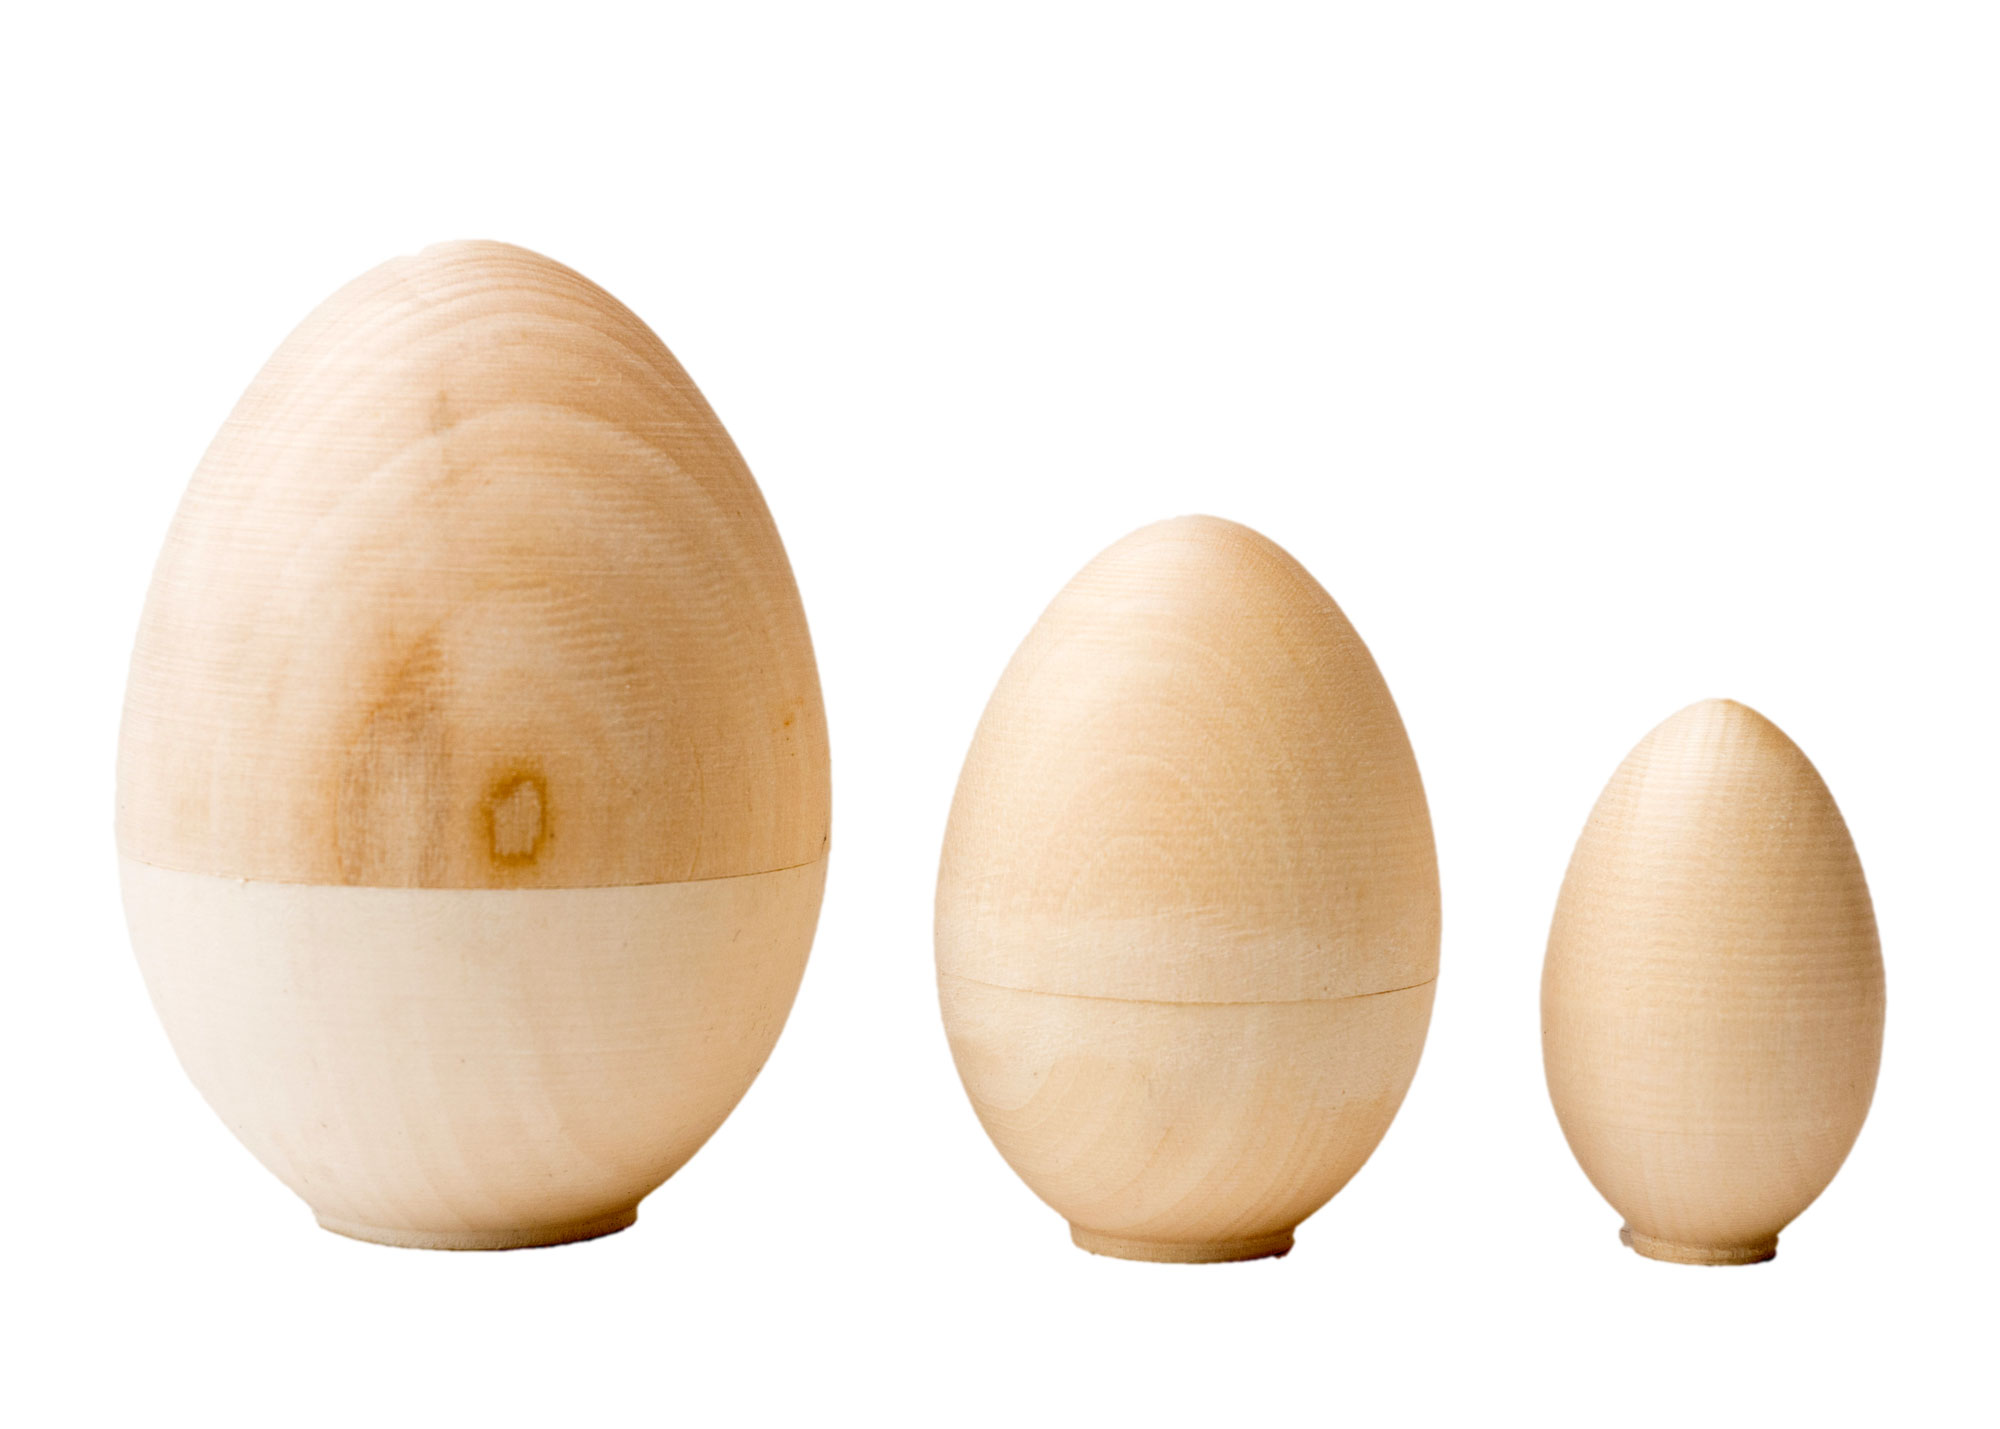 Buy Blank Nesting Egg 3pc./4" at GoldenCockerel.com